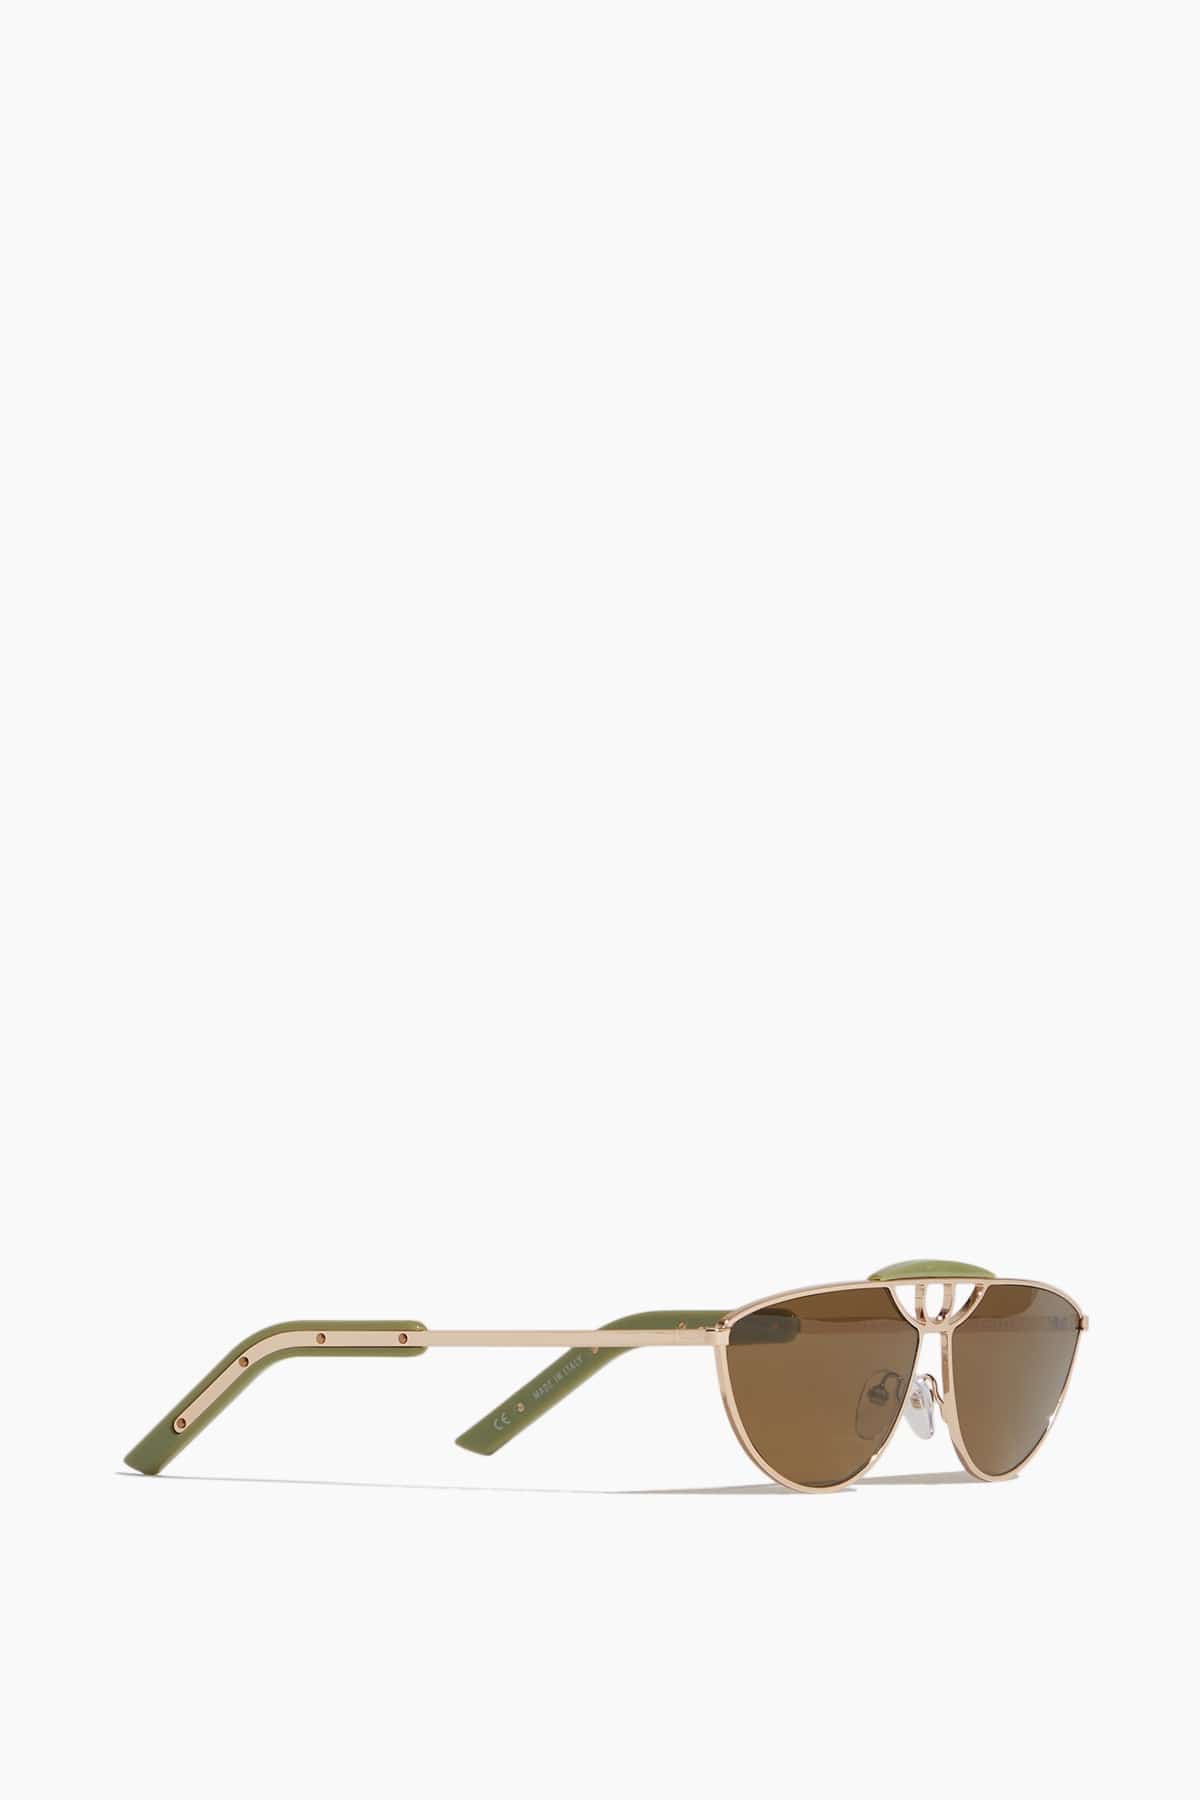 Clean Waves Sunglasses Inez and Vinoodh Eye Sunglasses in Green Clean Waves Inez and Vinoodh Eye Sunglasses in Green